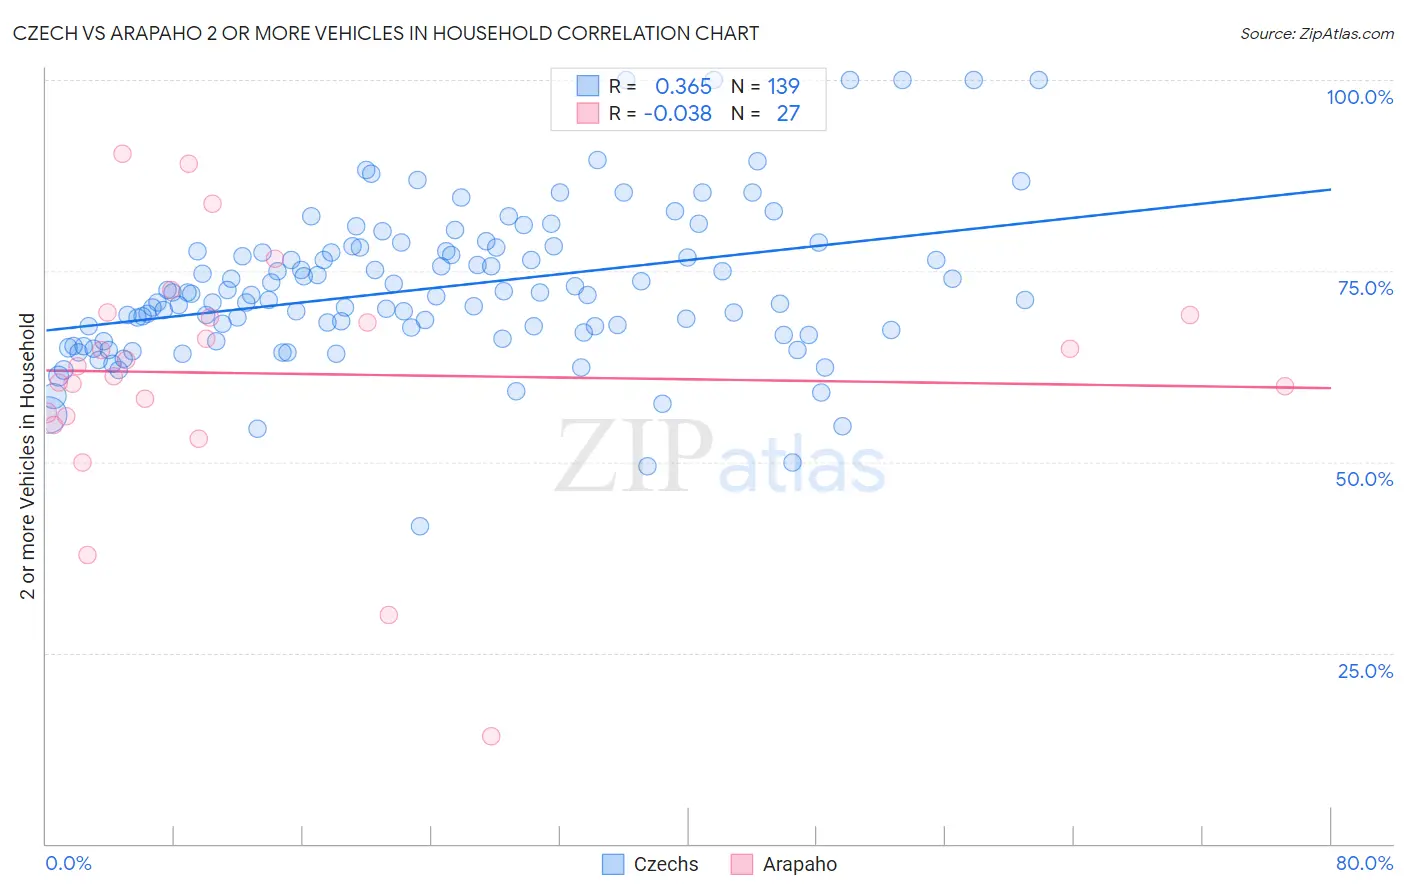 Czech vs Arapaho 2 or more Vehicles in Household